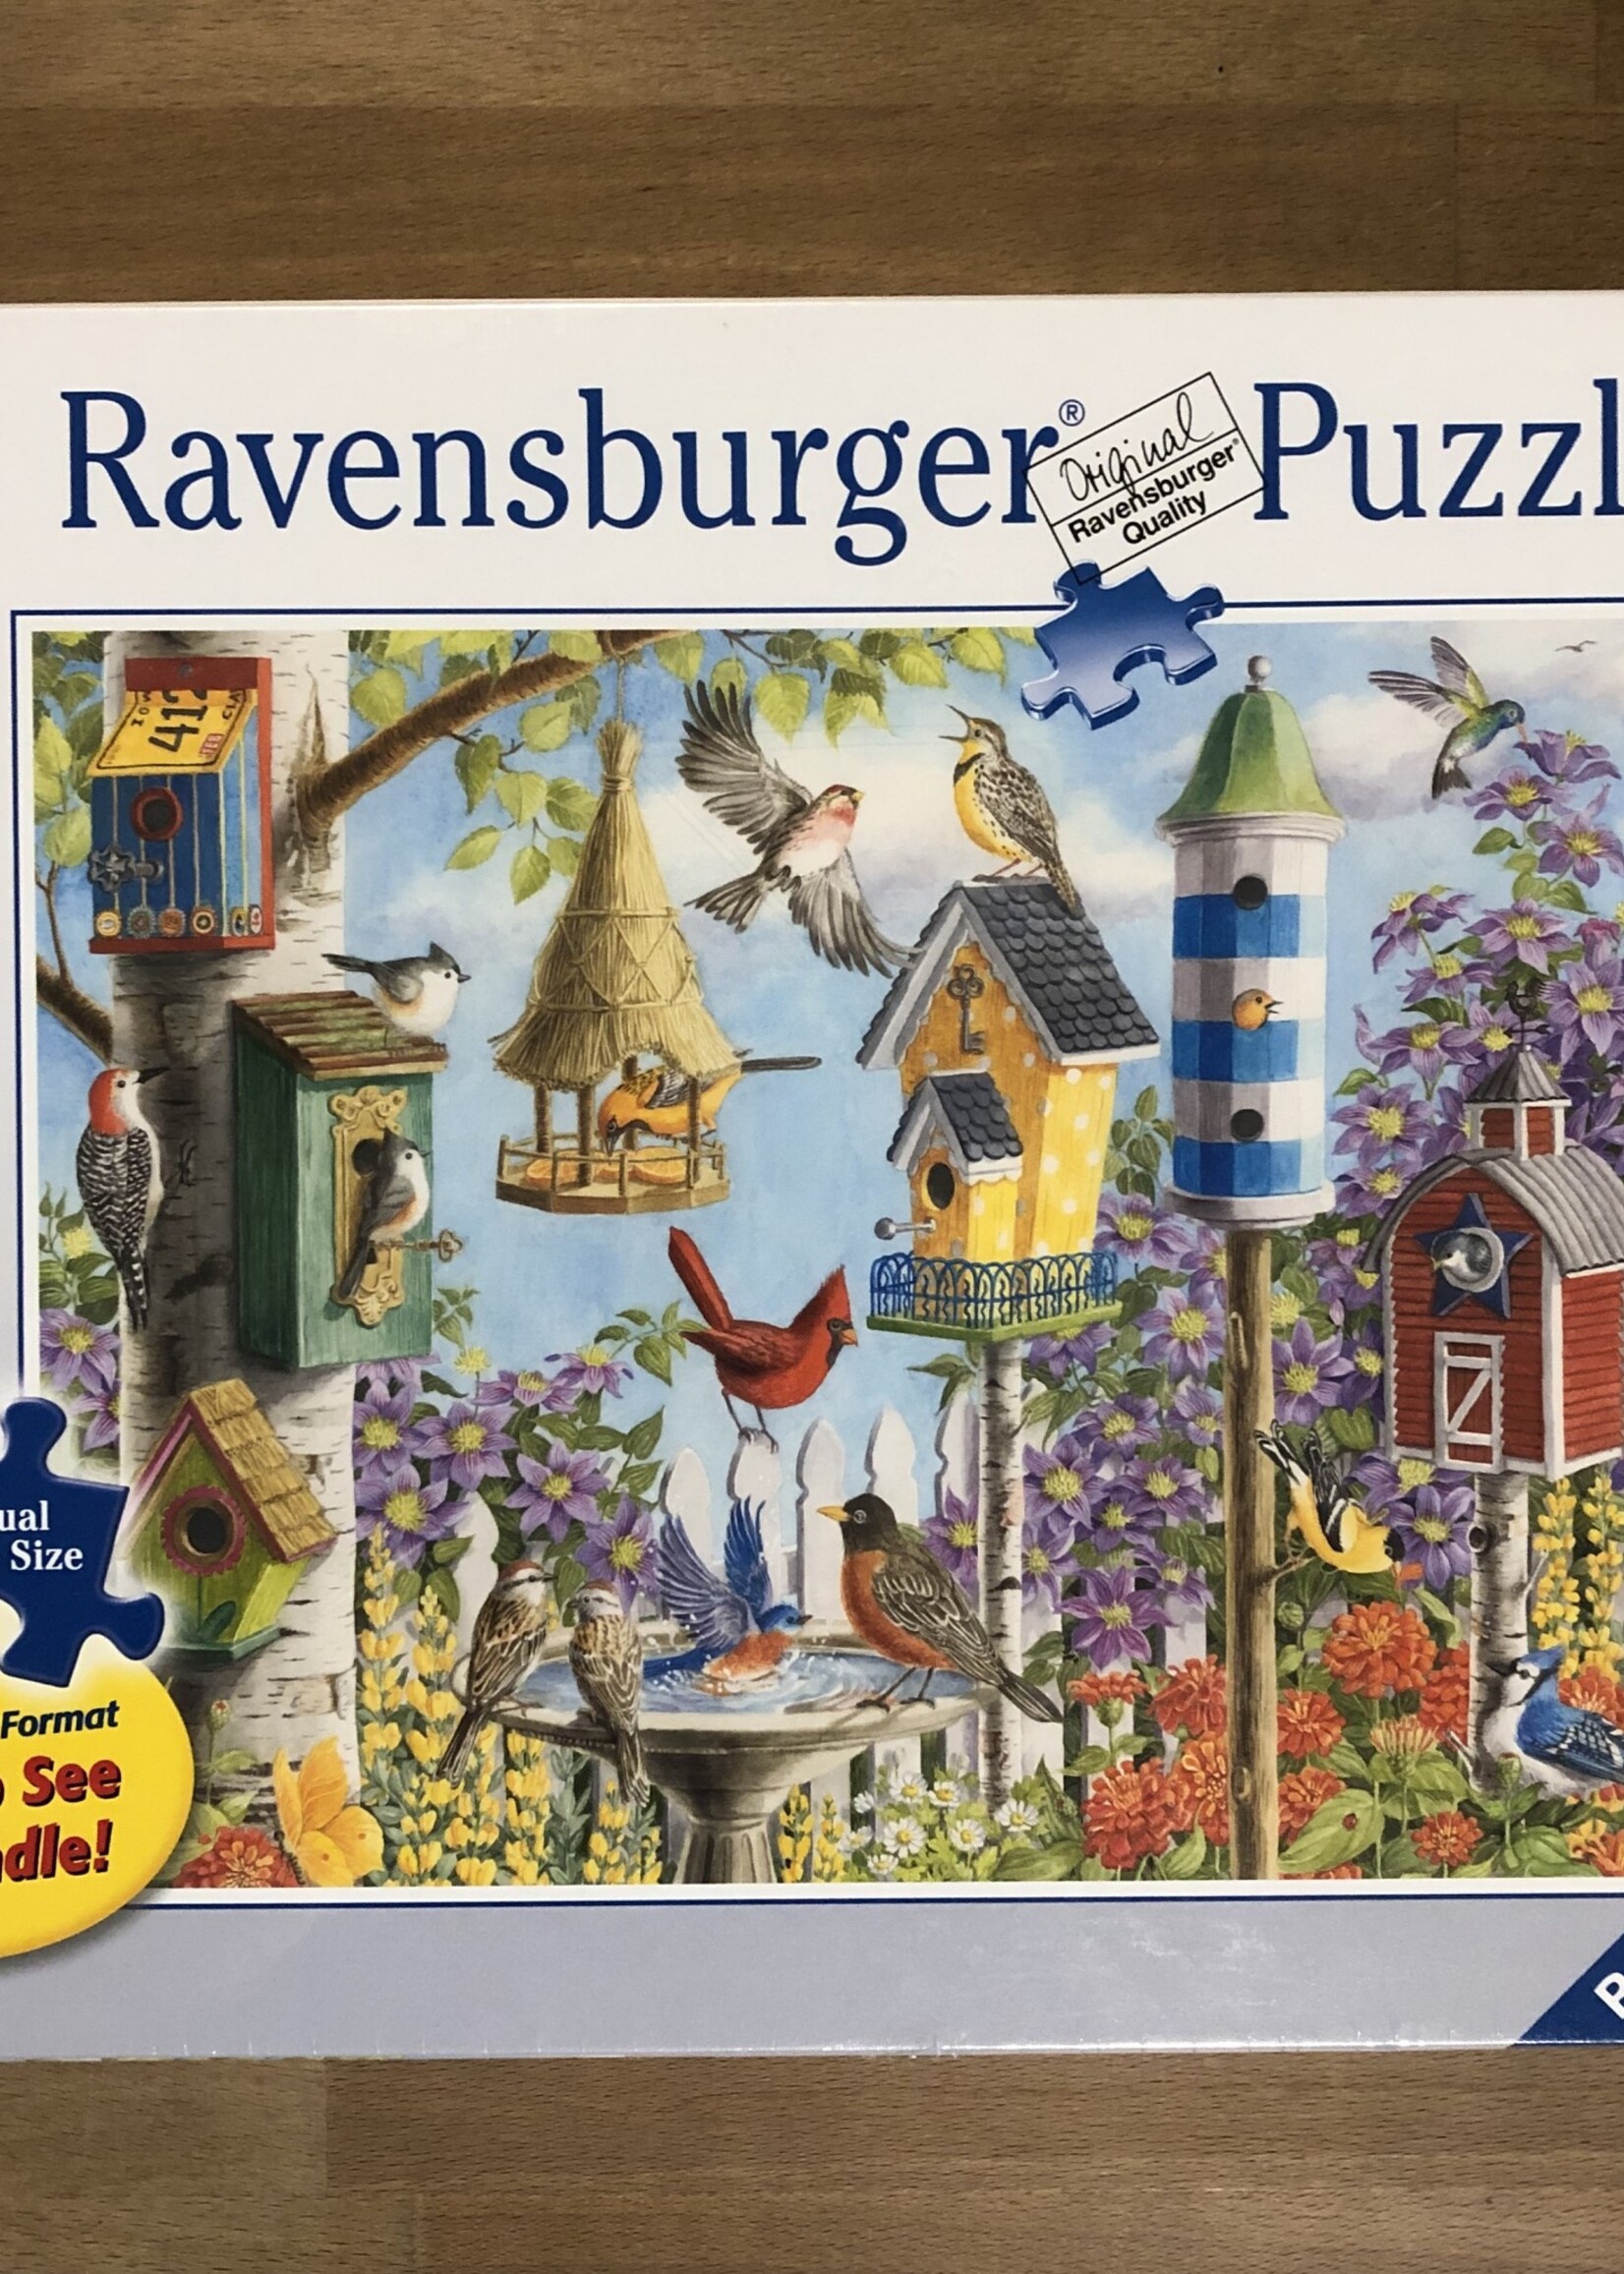 Ravensburger Puzzle - Home Tweet Home 300 pc